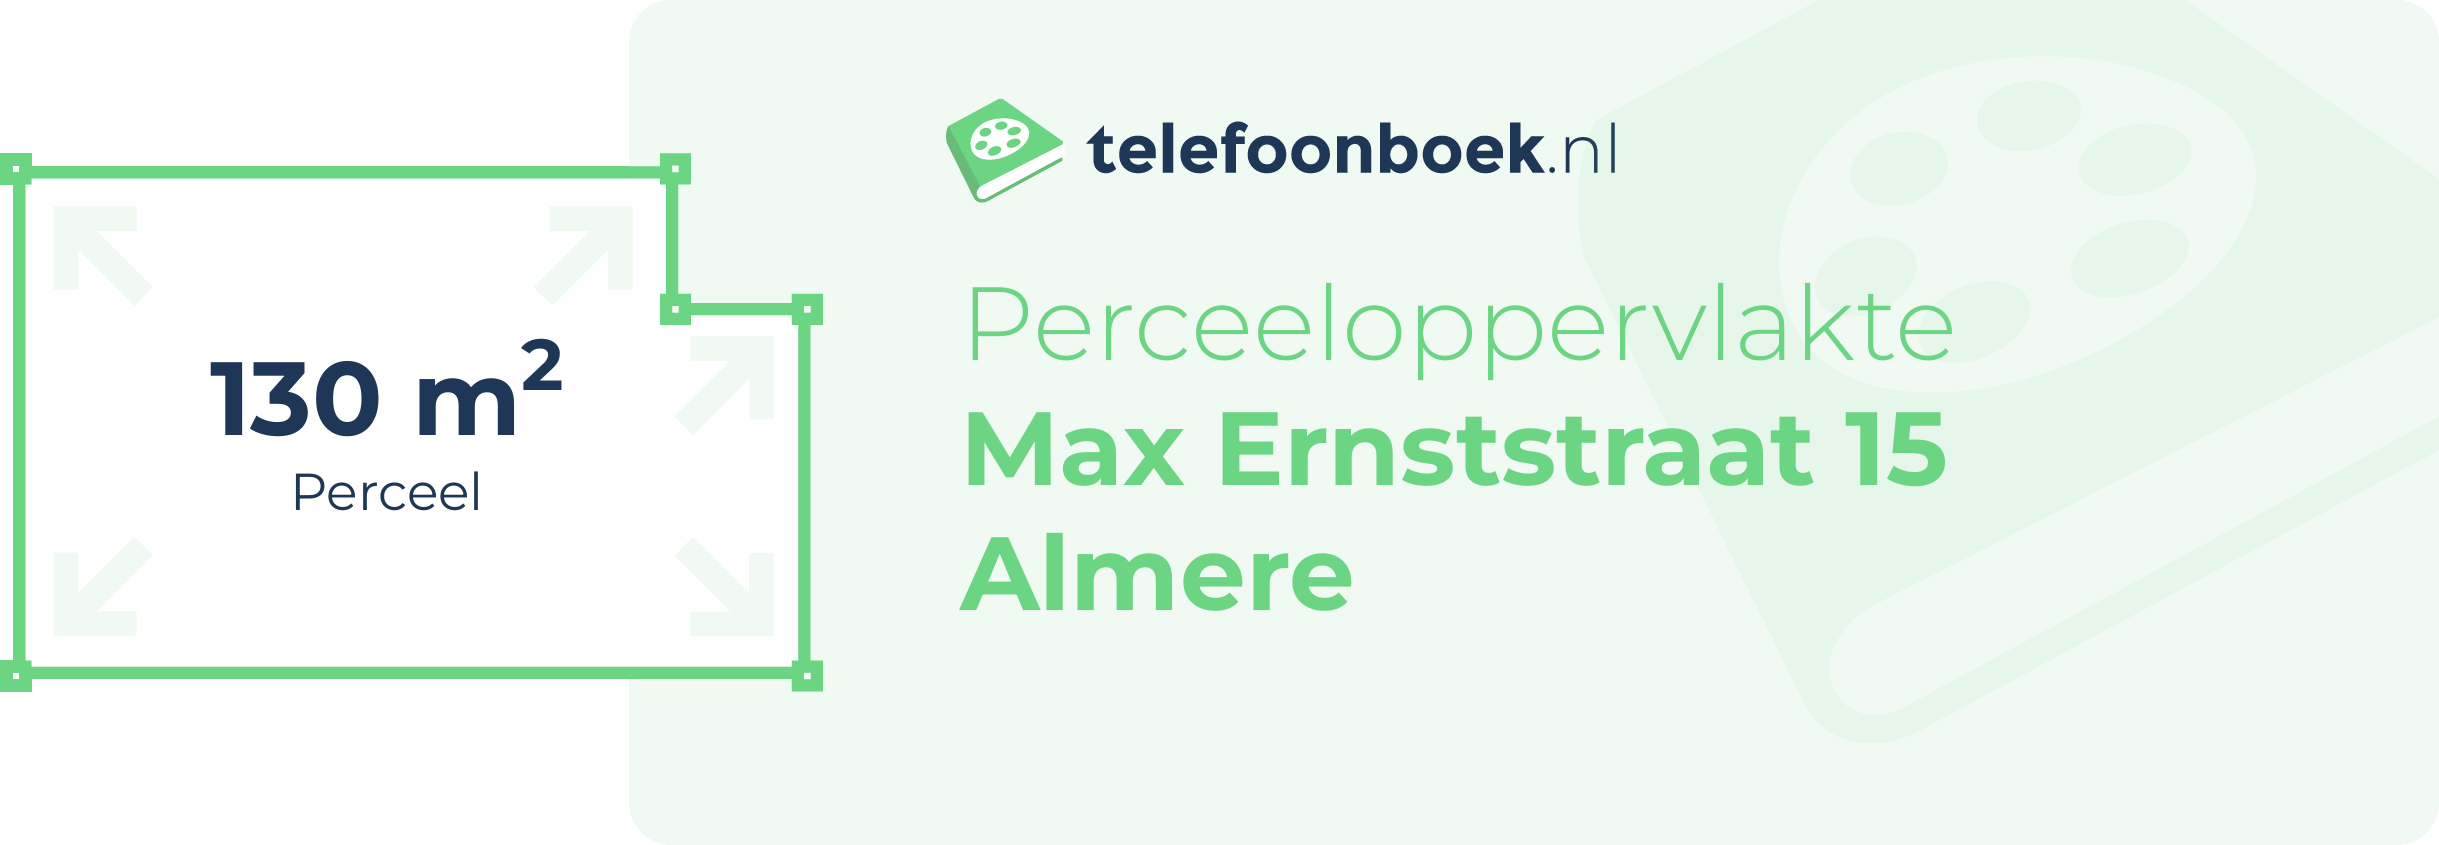 Perceeloppervlakte Max Ernststraat 15 Almere